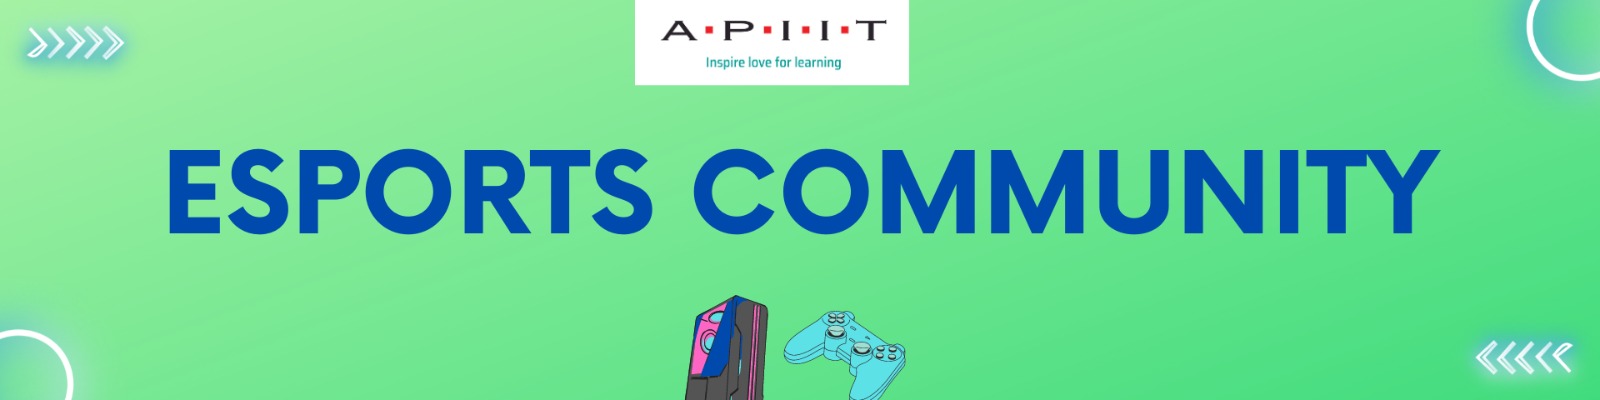 APIIT ESPORTS COMMUNITY